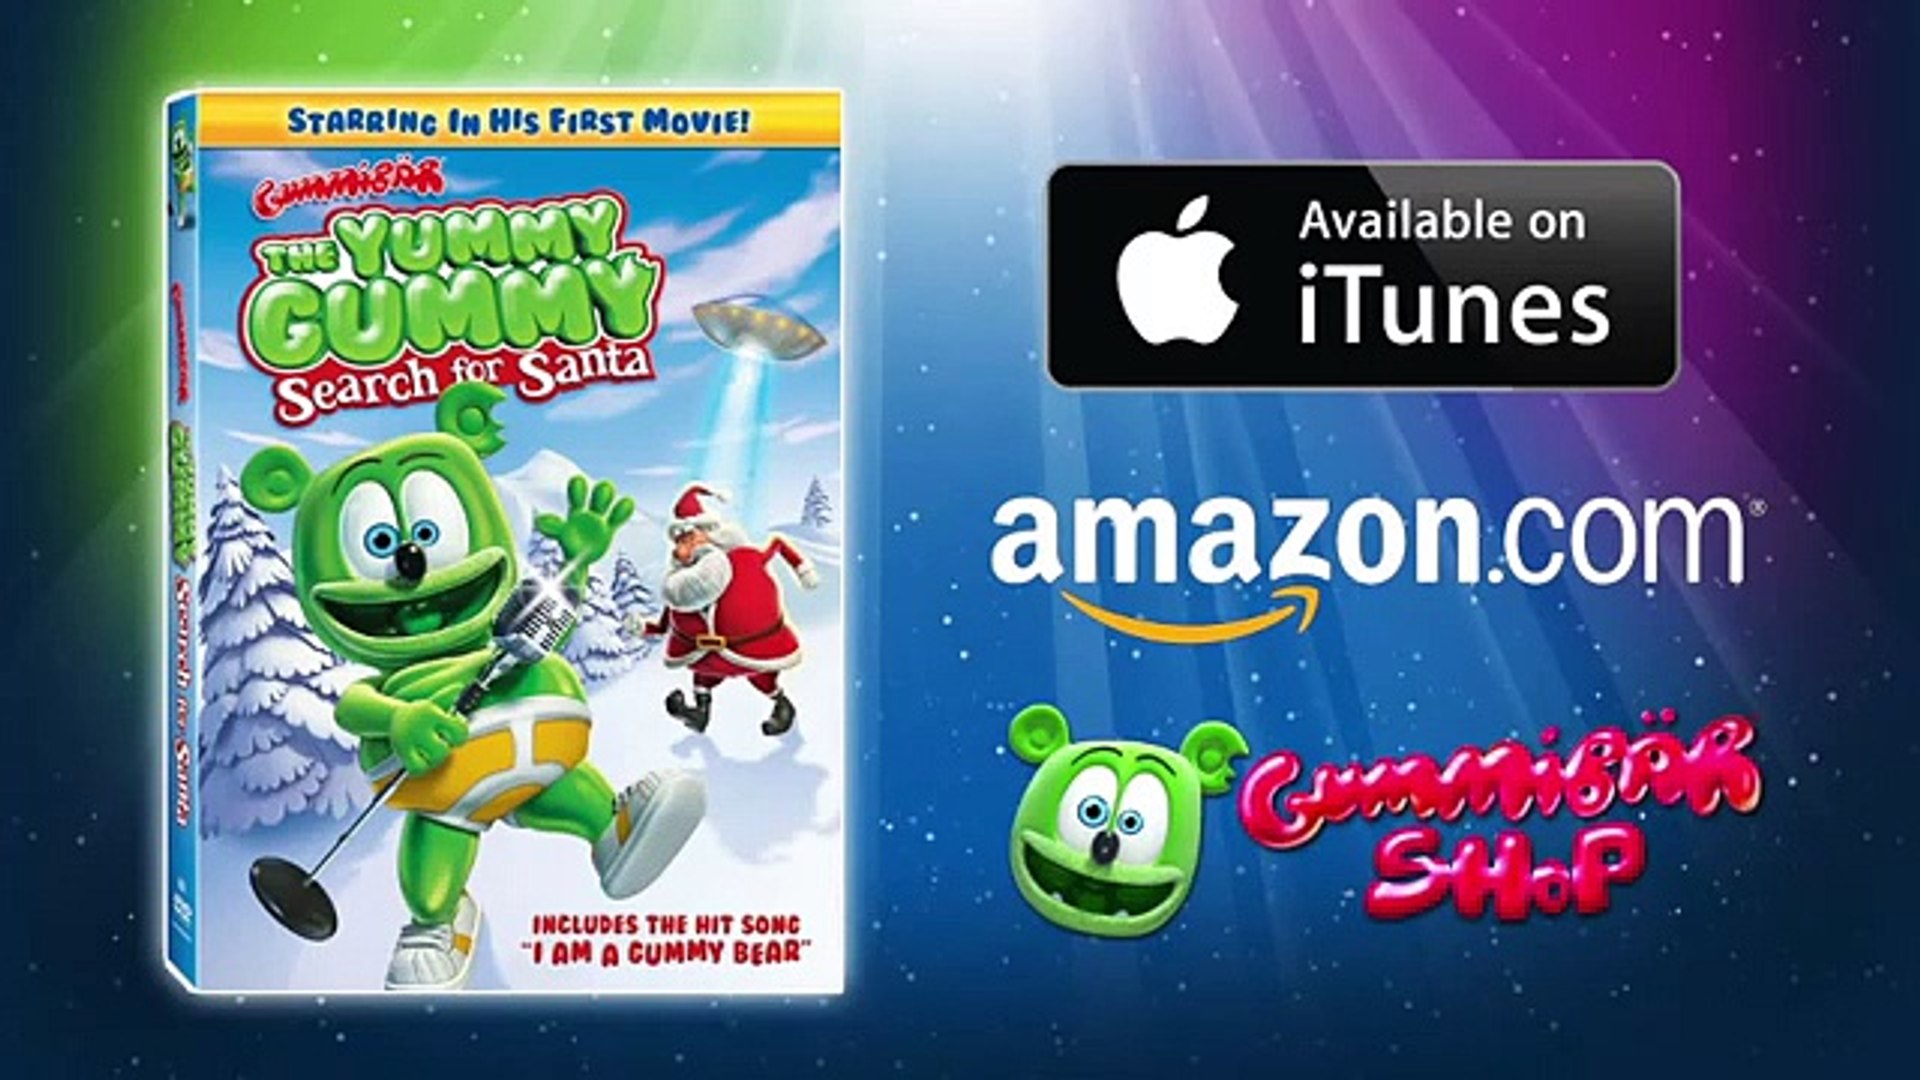 LUCKY STAR Gummibär The GUMMY BEAR Yummy Gummy Search For Santa CHRISTMAS  DVD - Dailymotion Video